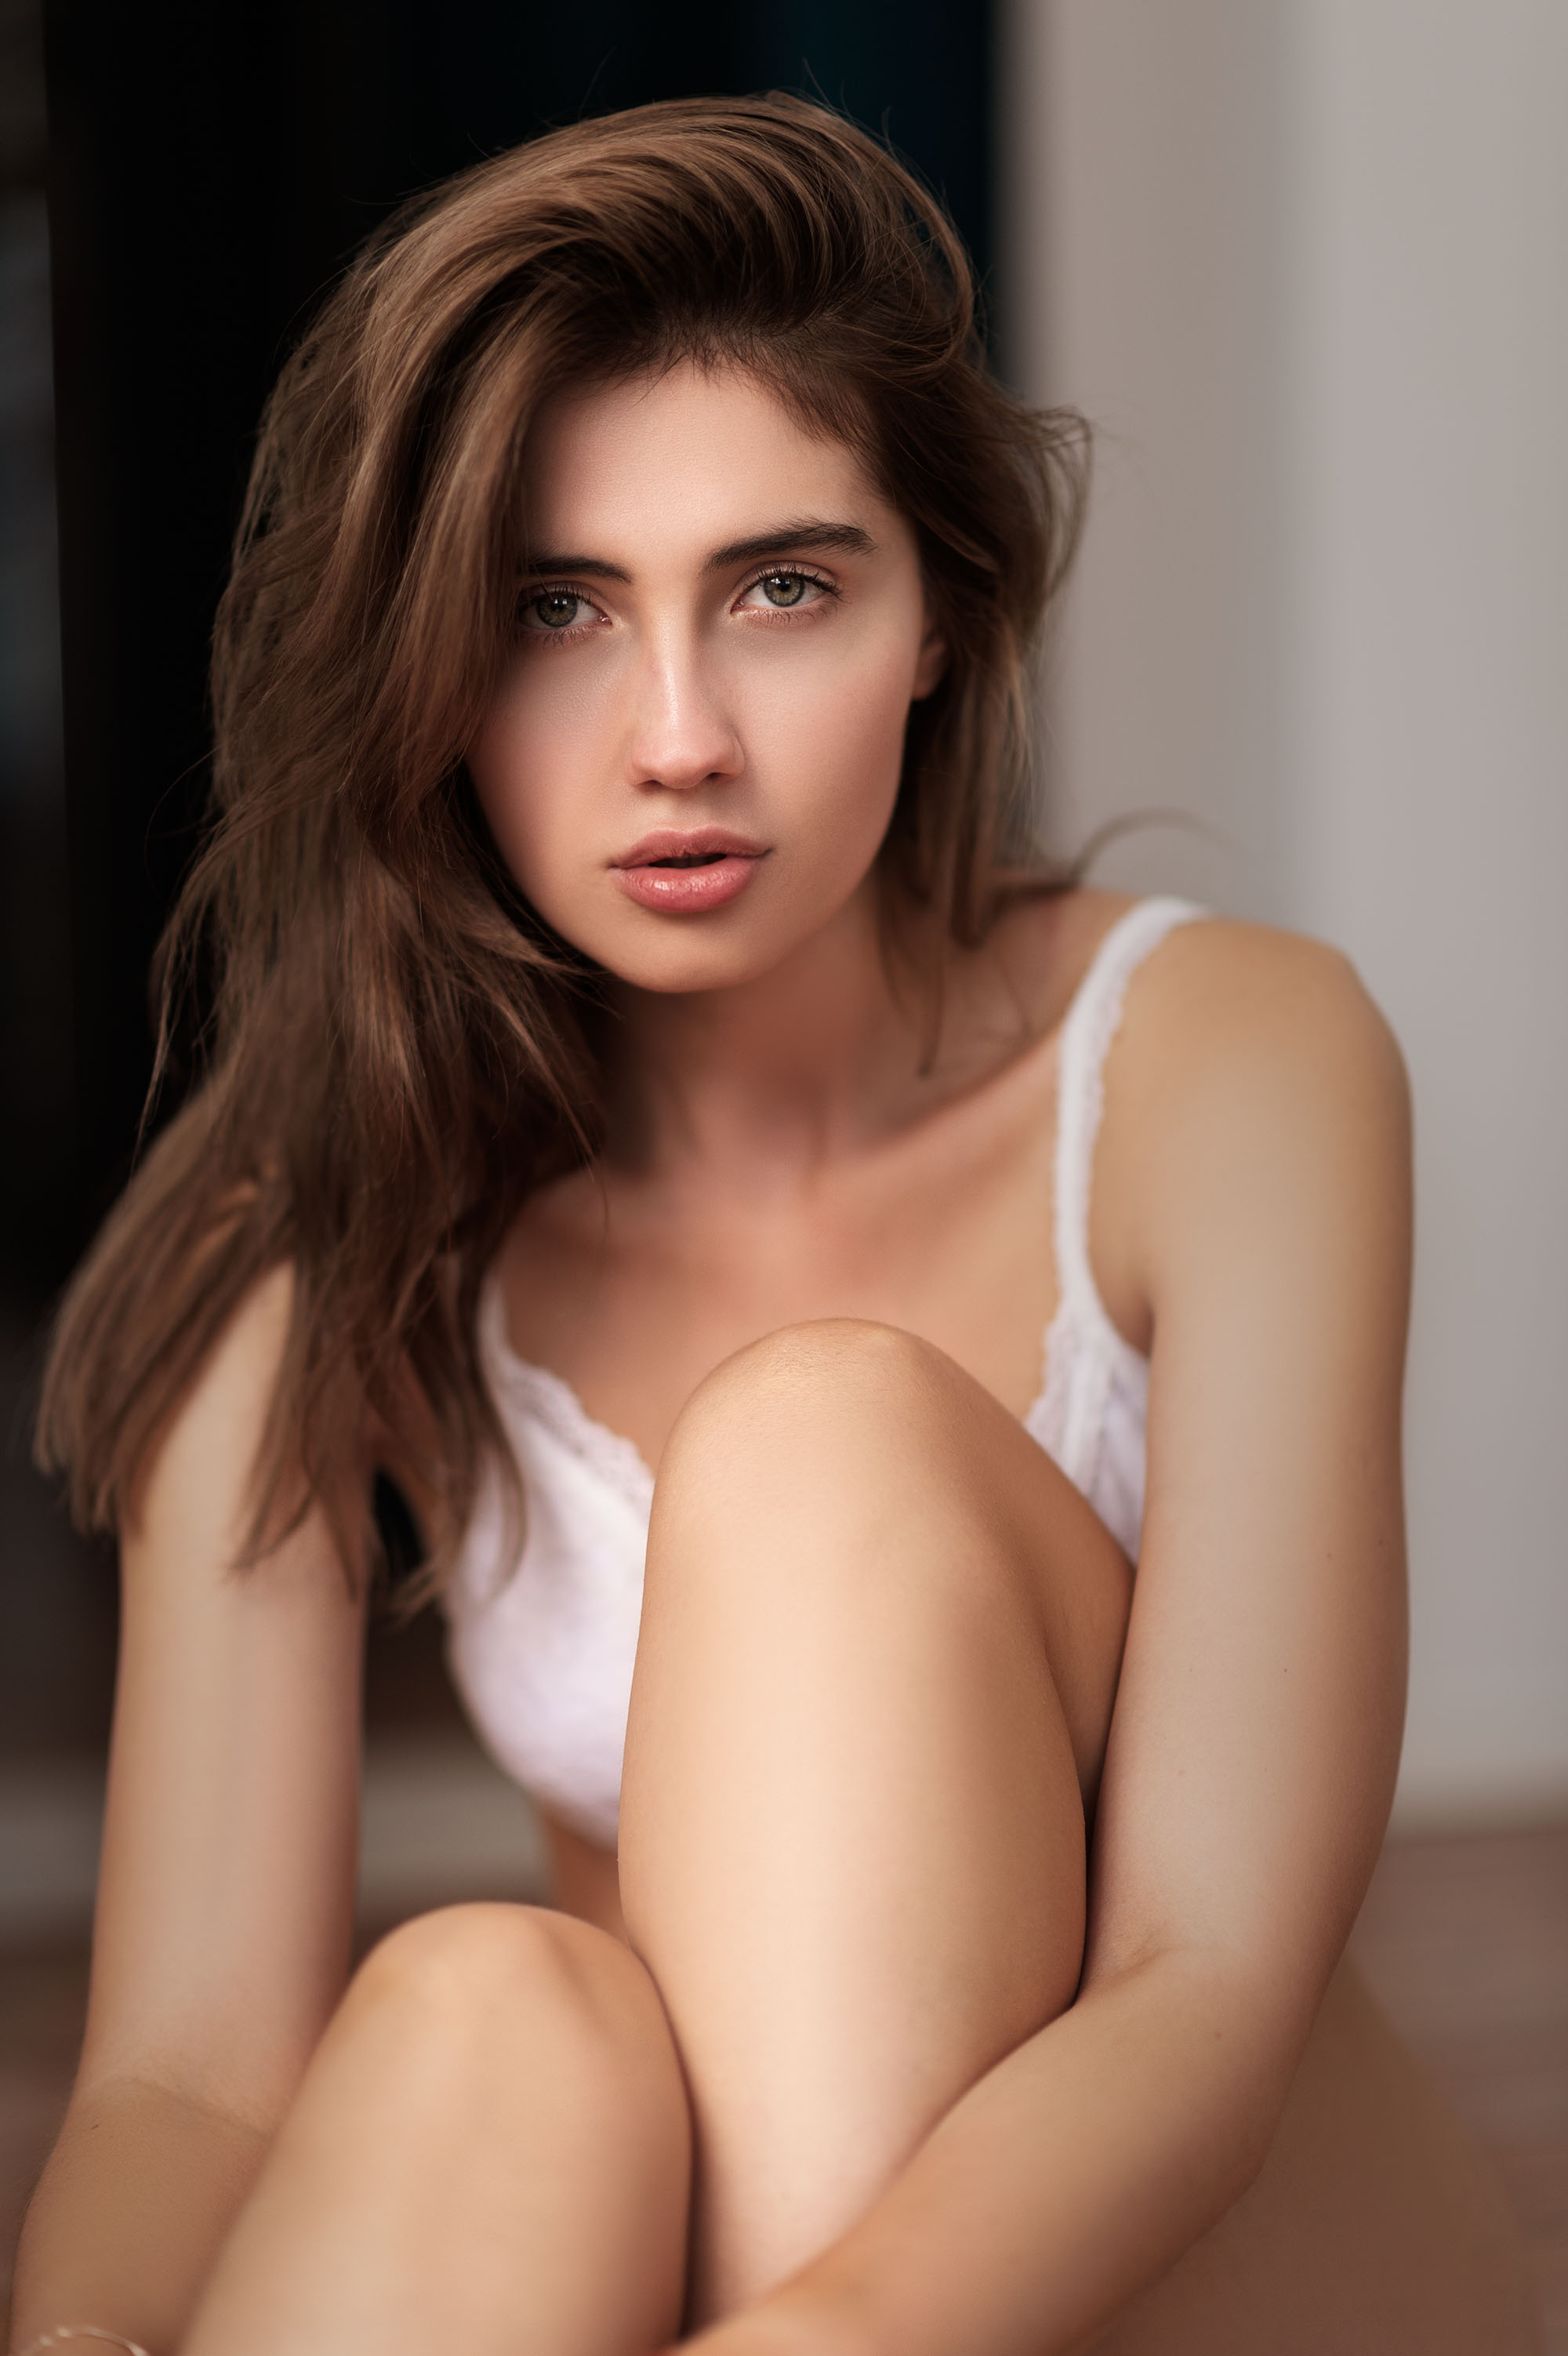 Alessandra Pokropyvna, model from Ukraine at a boudoir photoshoot